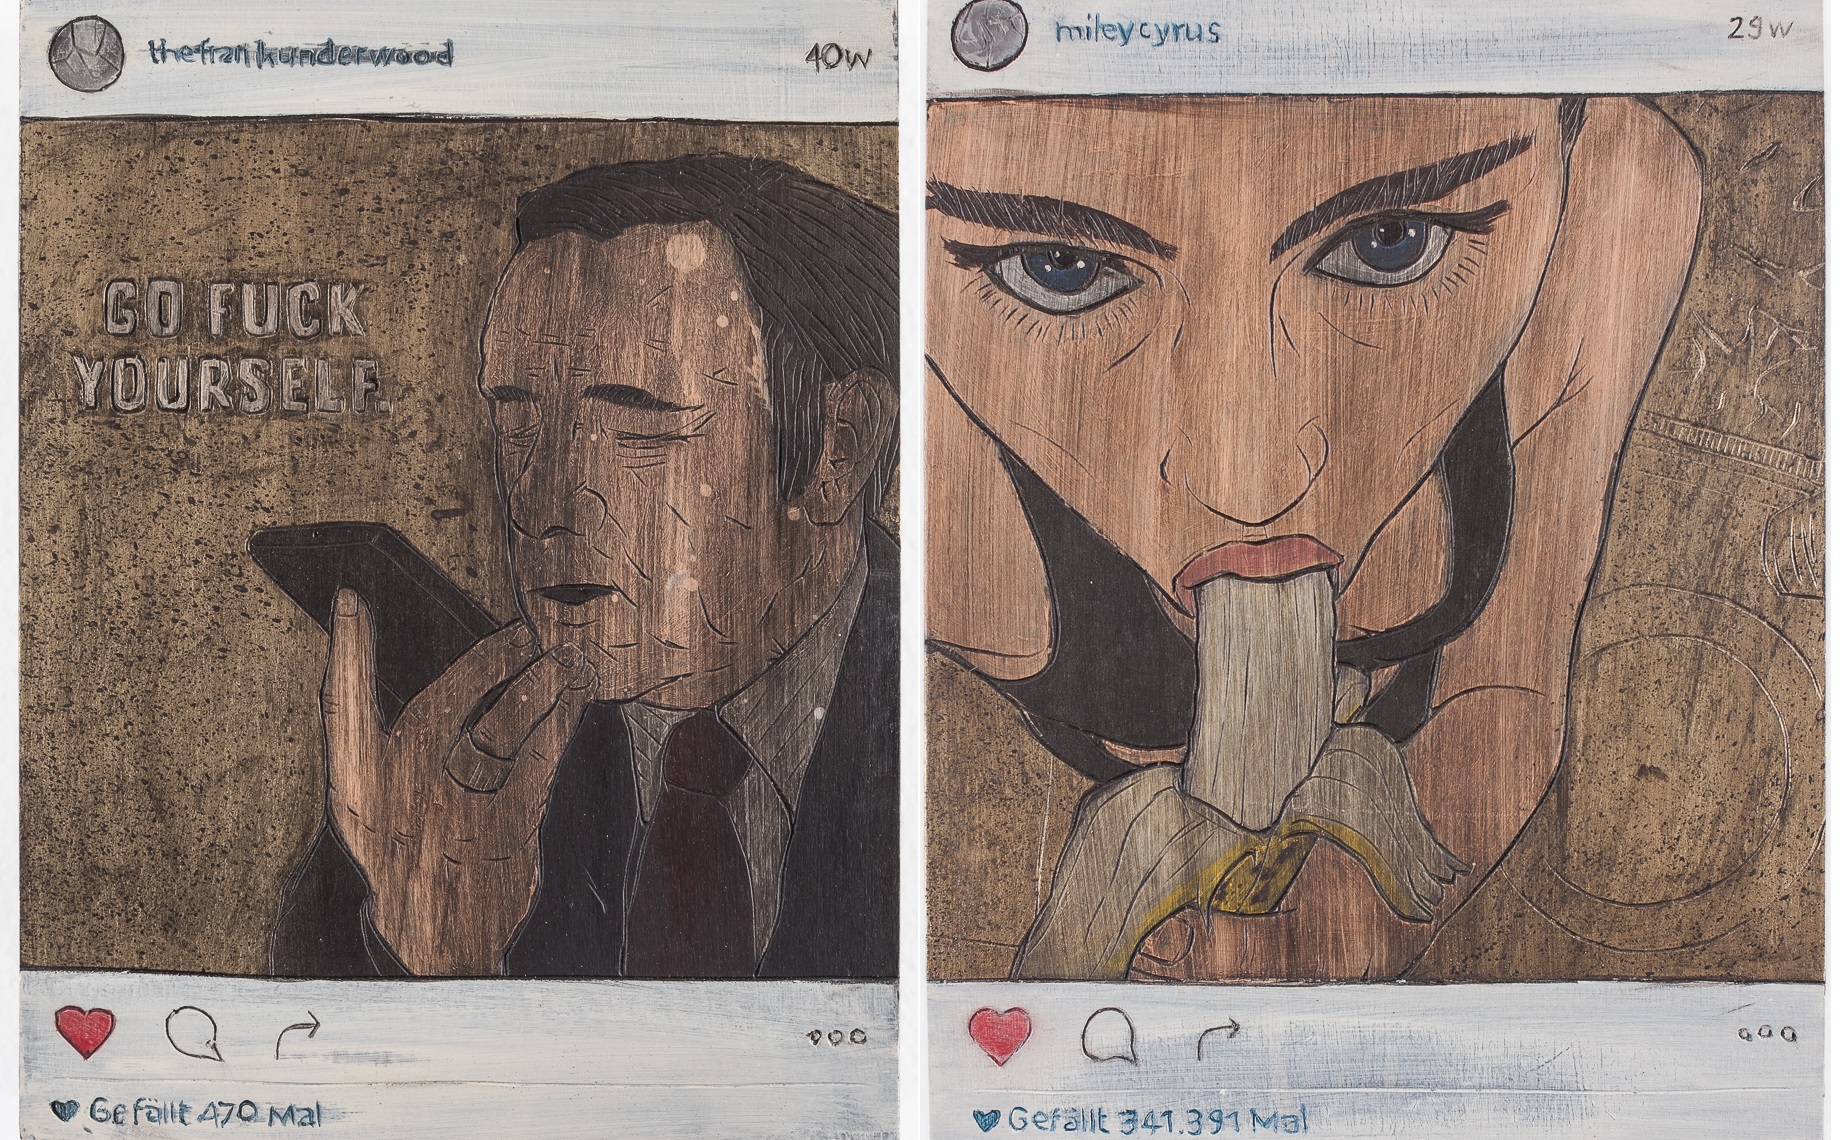 German artist turns famous Instagram posts into wooden ...